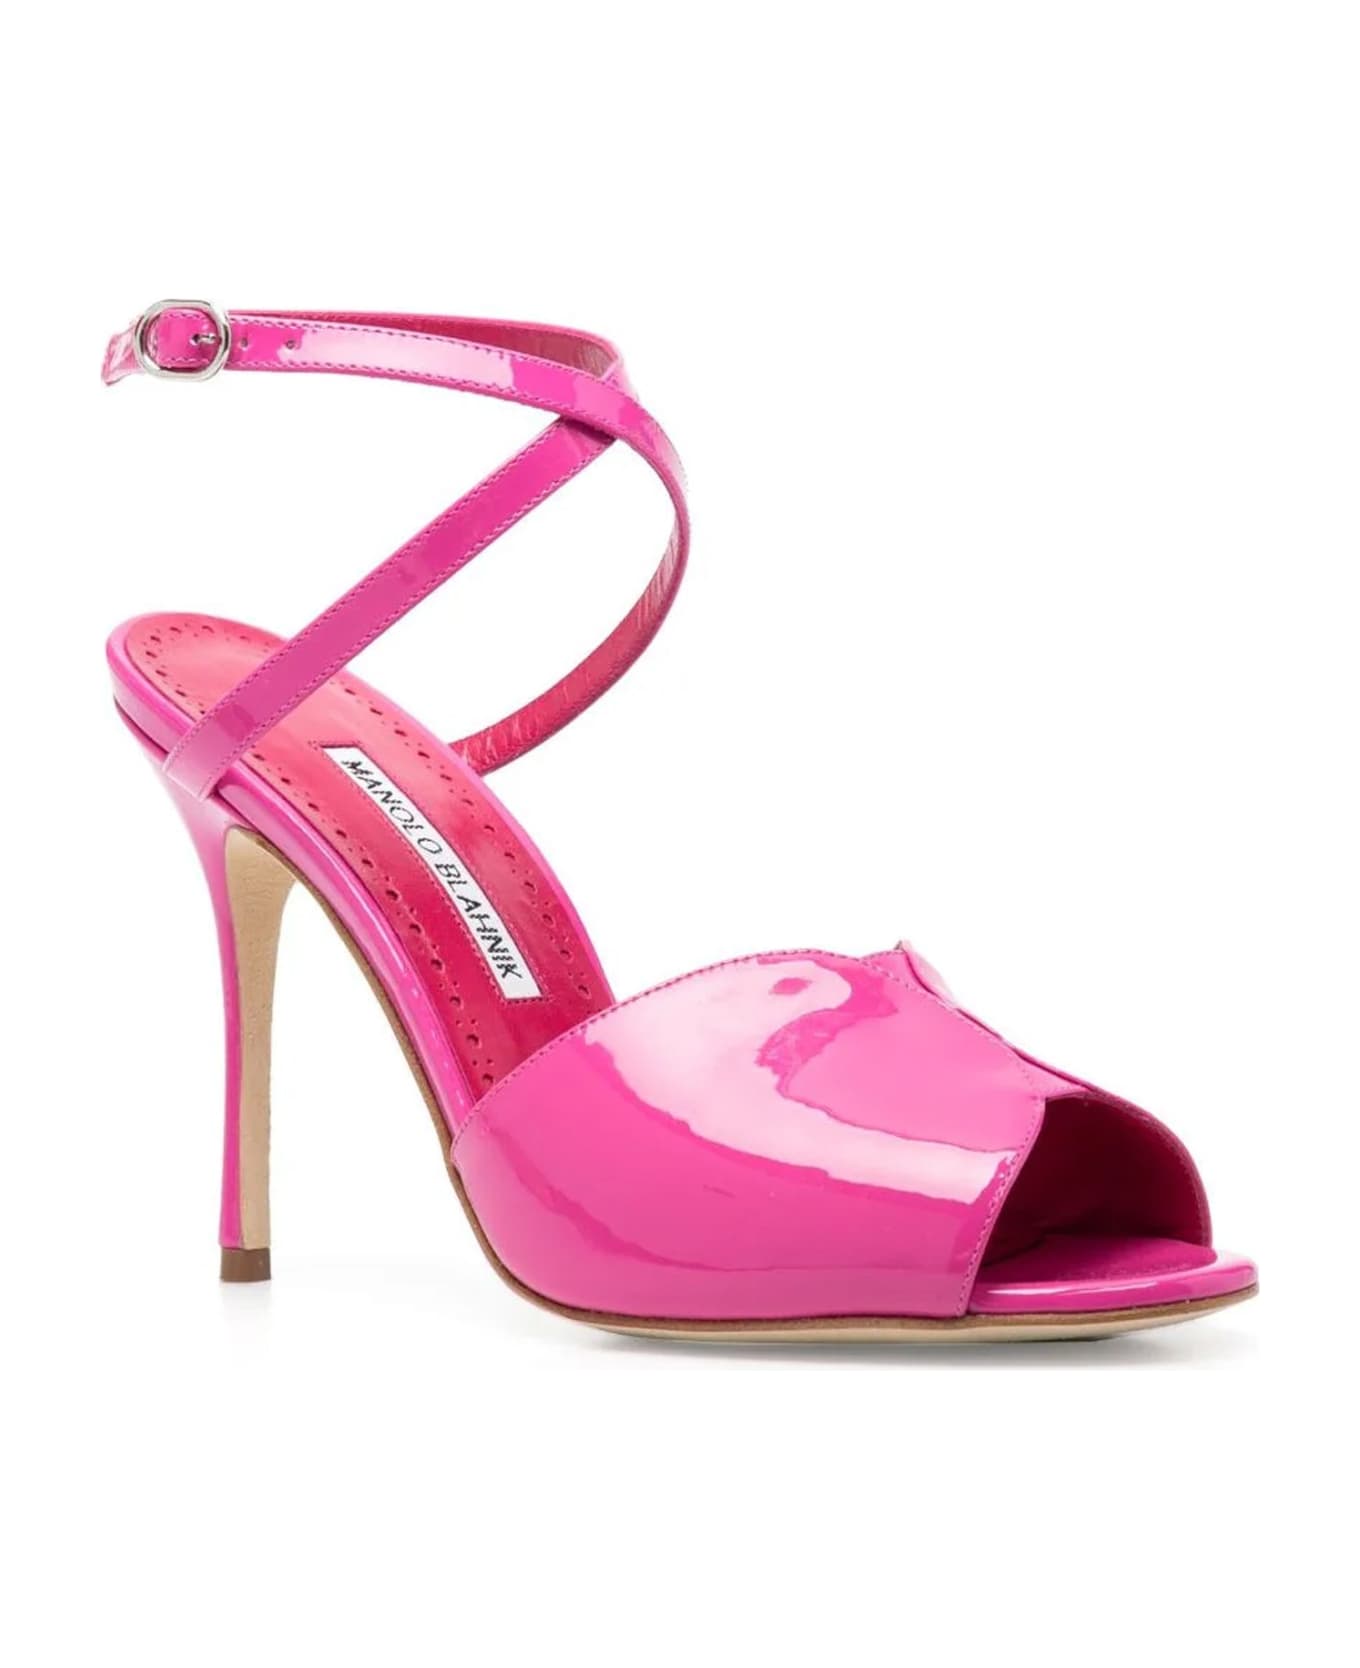 Manolo Blahnik Hourani 105 Sandals - Pink